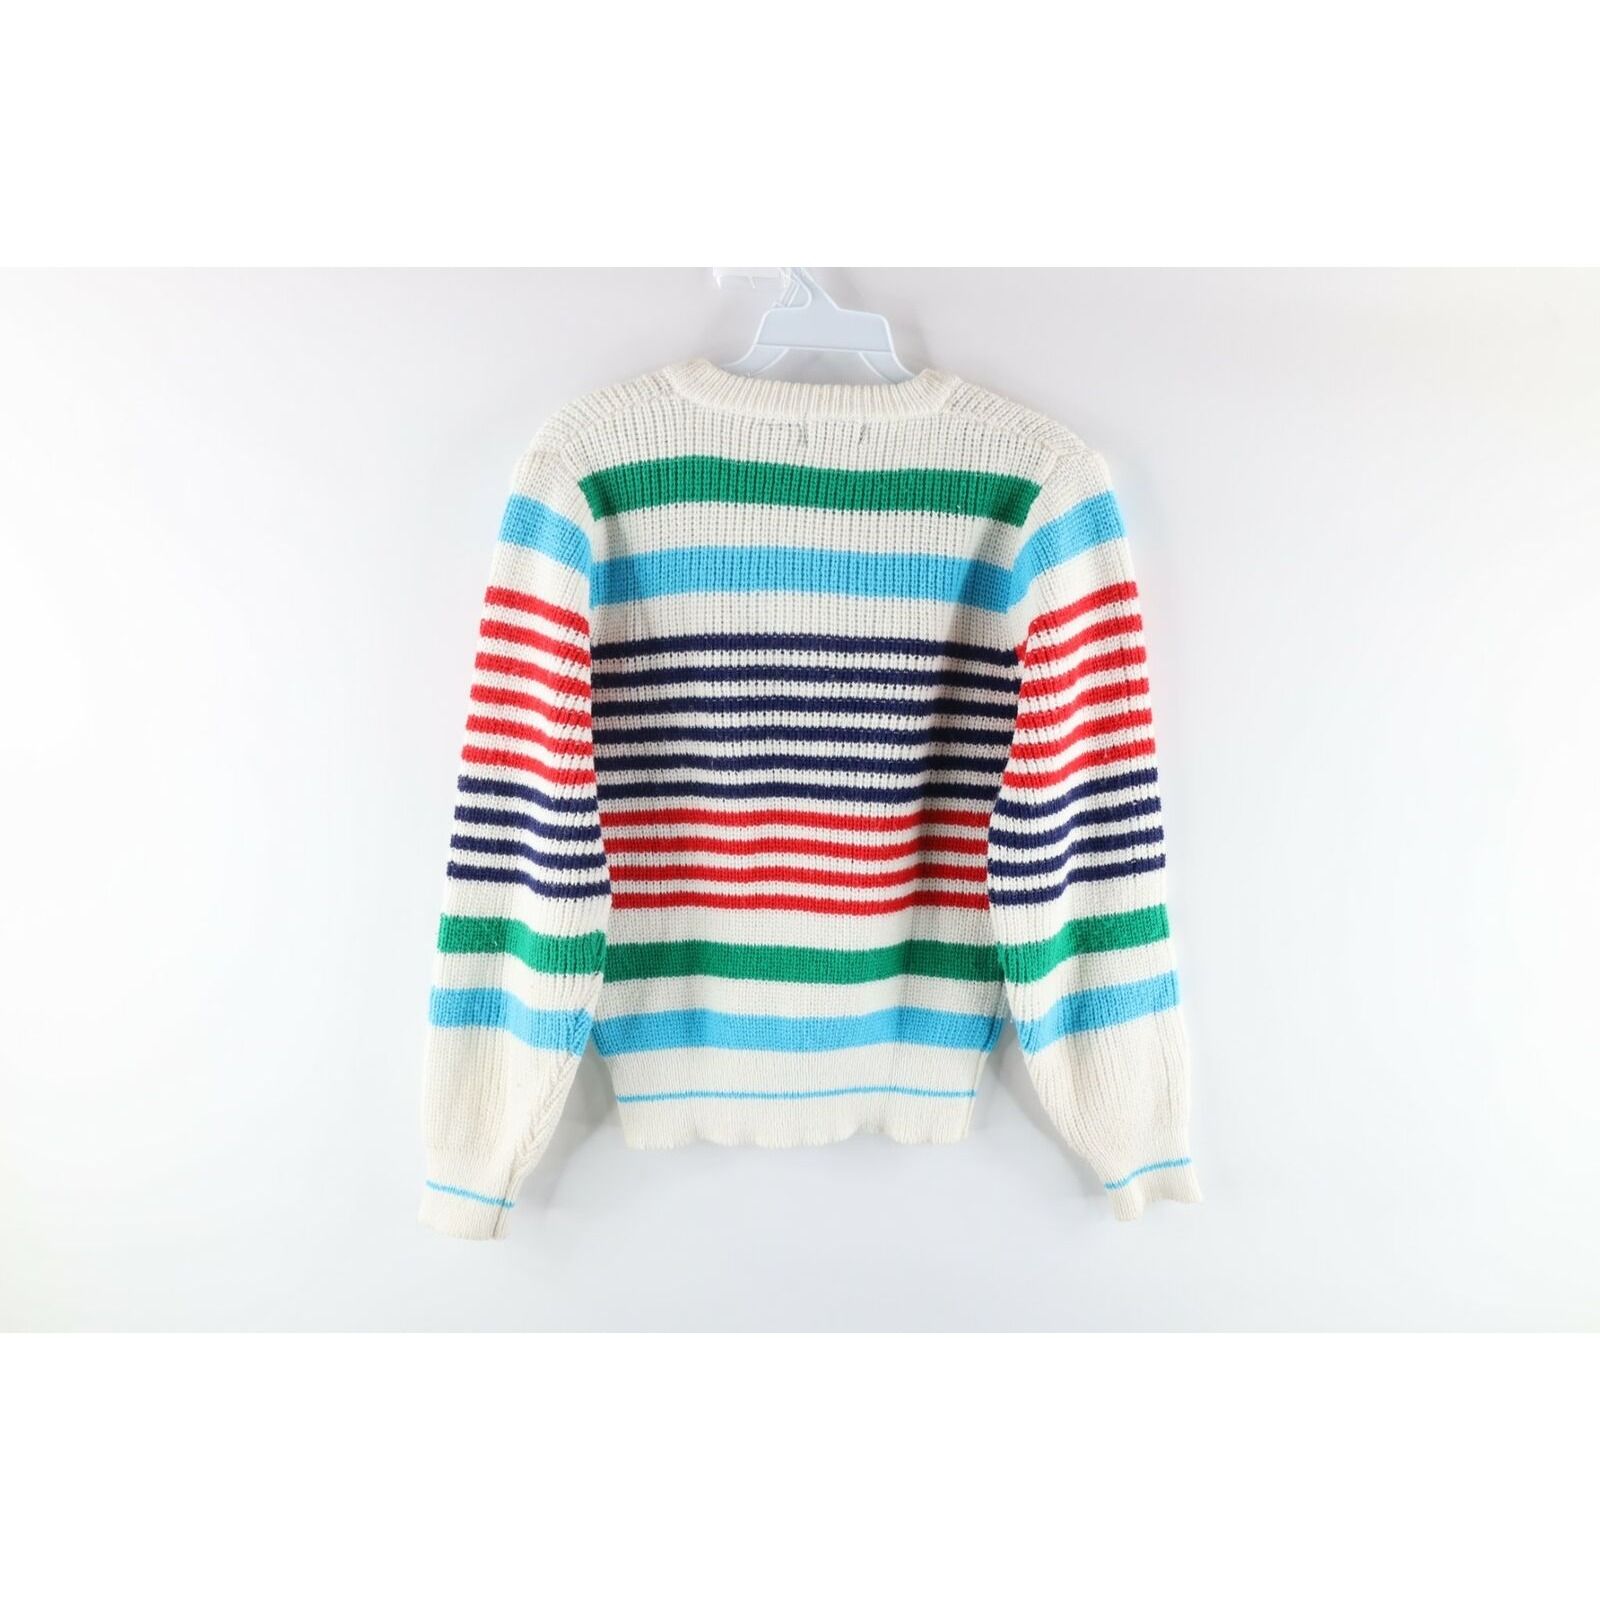 Vintage Vintage 70s Rockabilly Medium Rainbow Striped Knit Sweater Size M / US 6-8 / IT 42-44 - 5 Thumbnail